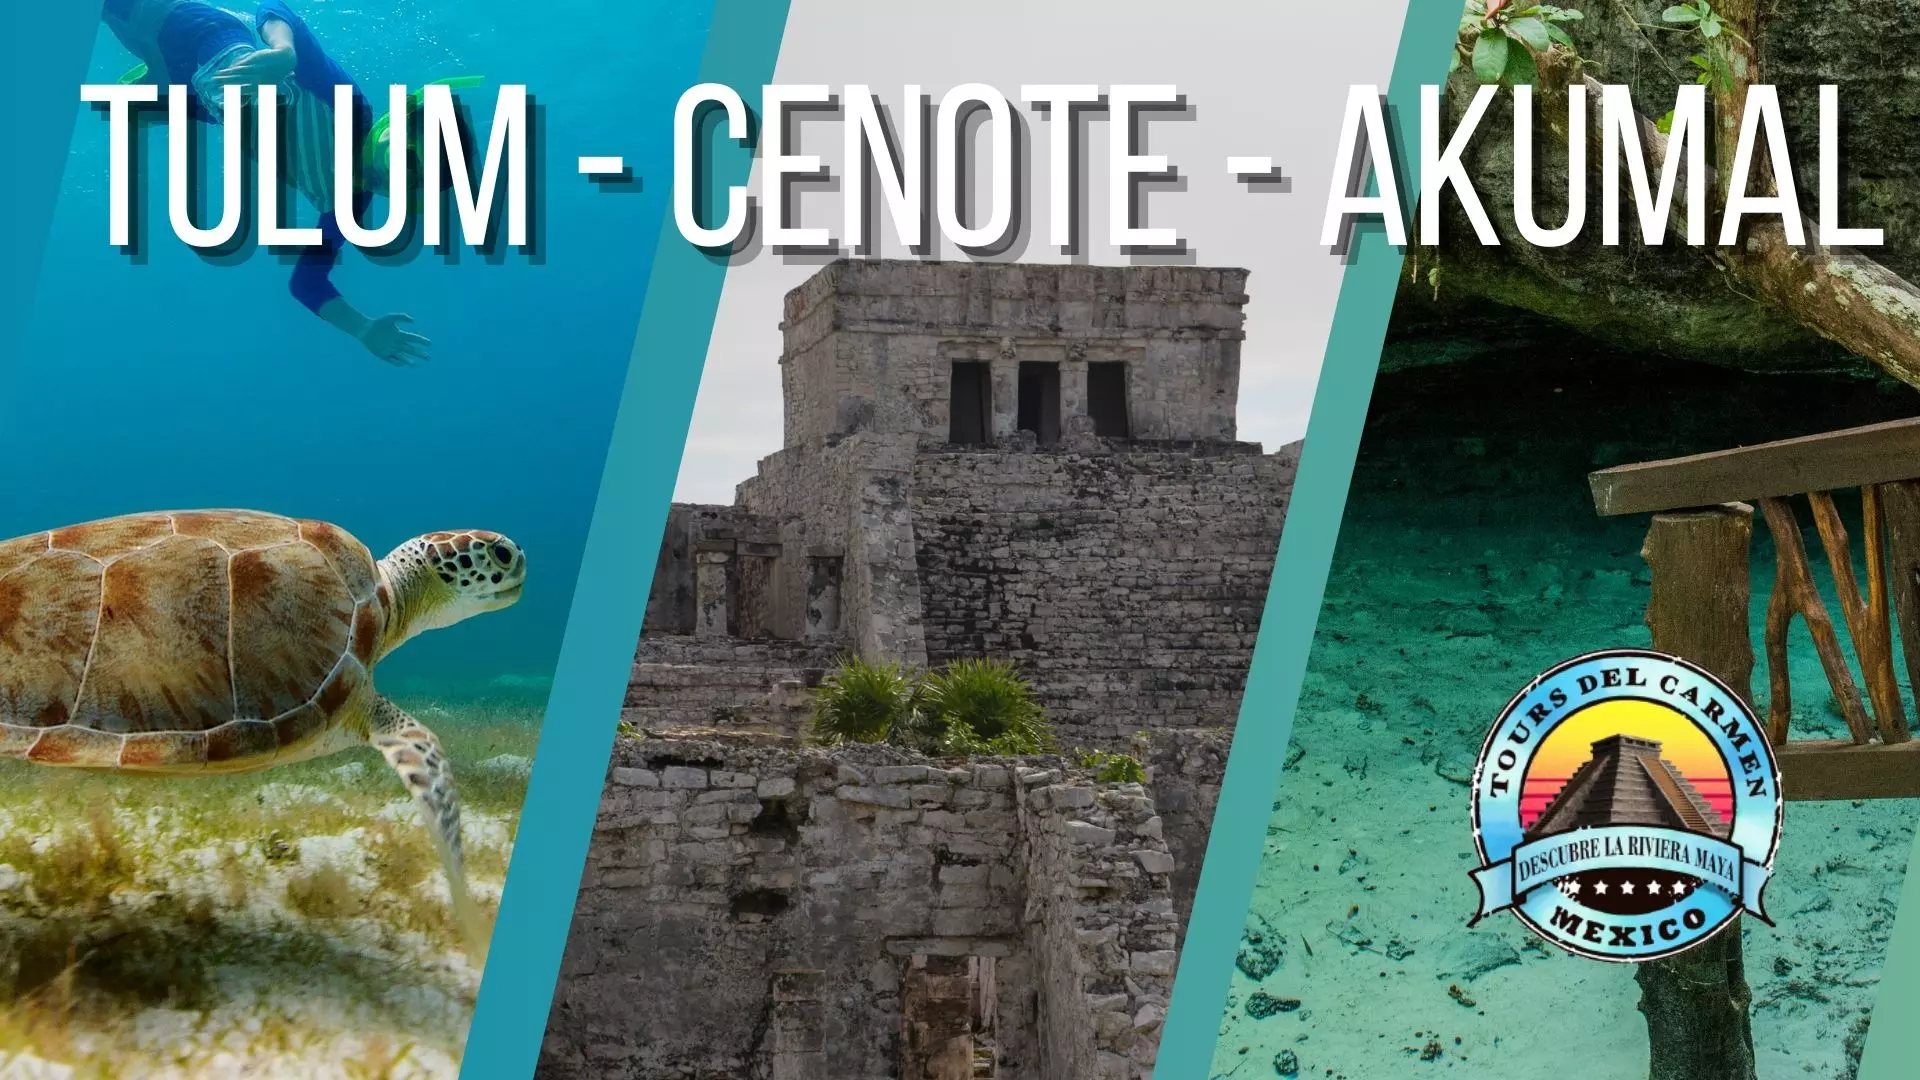 Tulum-Cenote-Akumal / Tours en Playa del Carmen